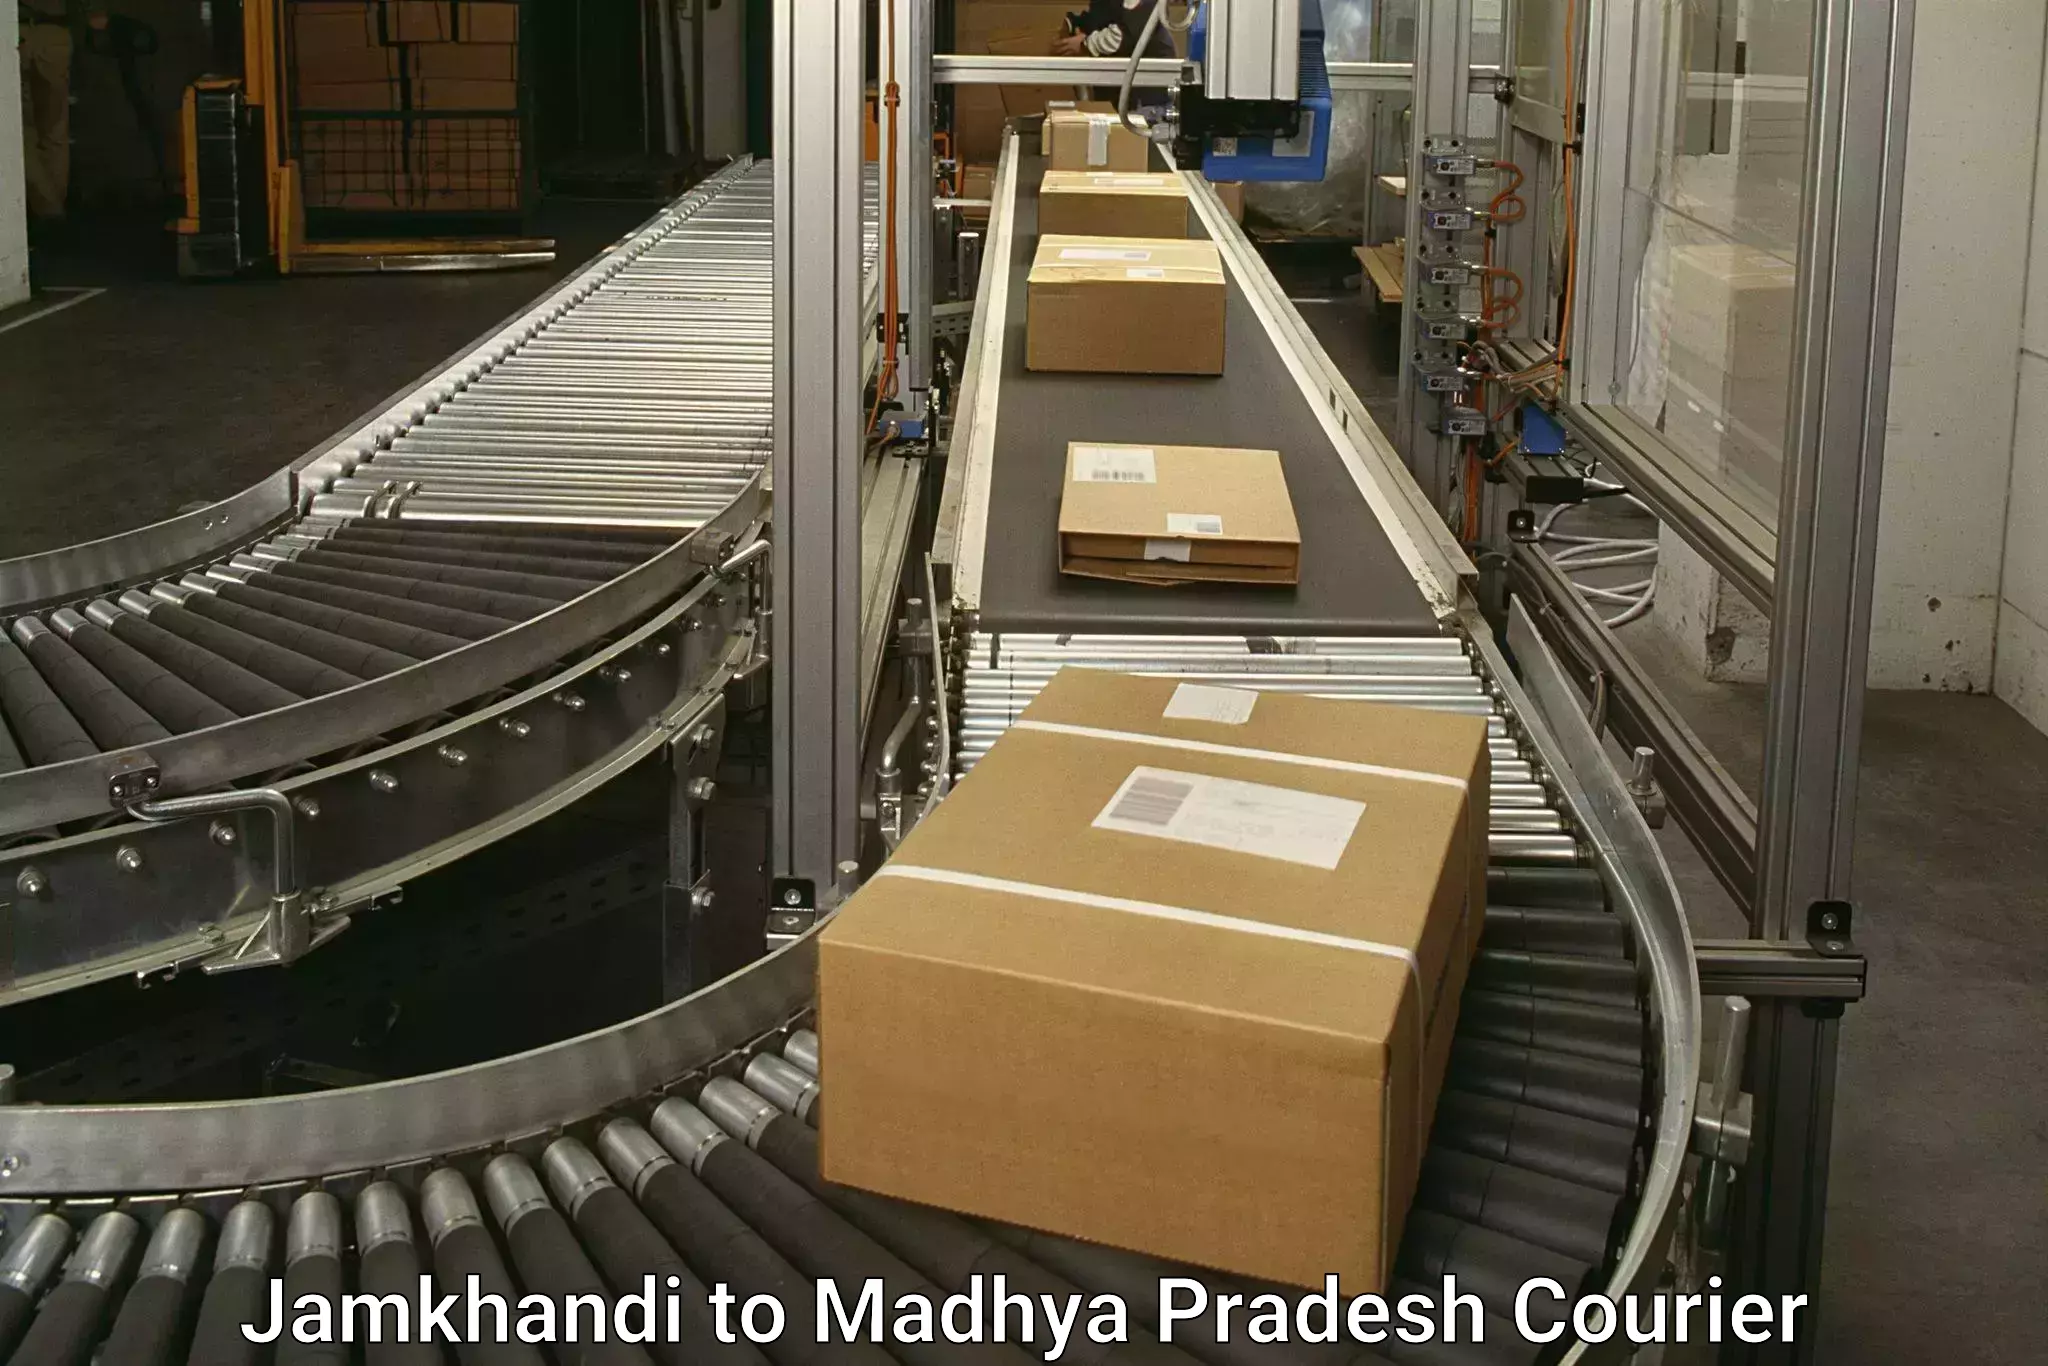 Courier service booking Jamkhandi to Vidisha